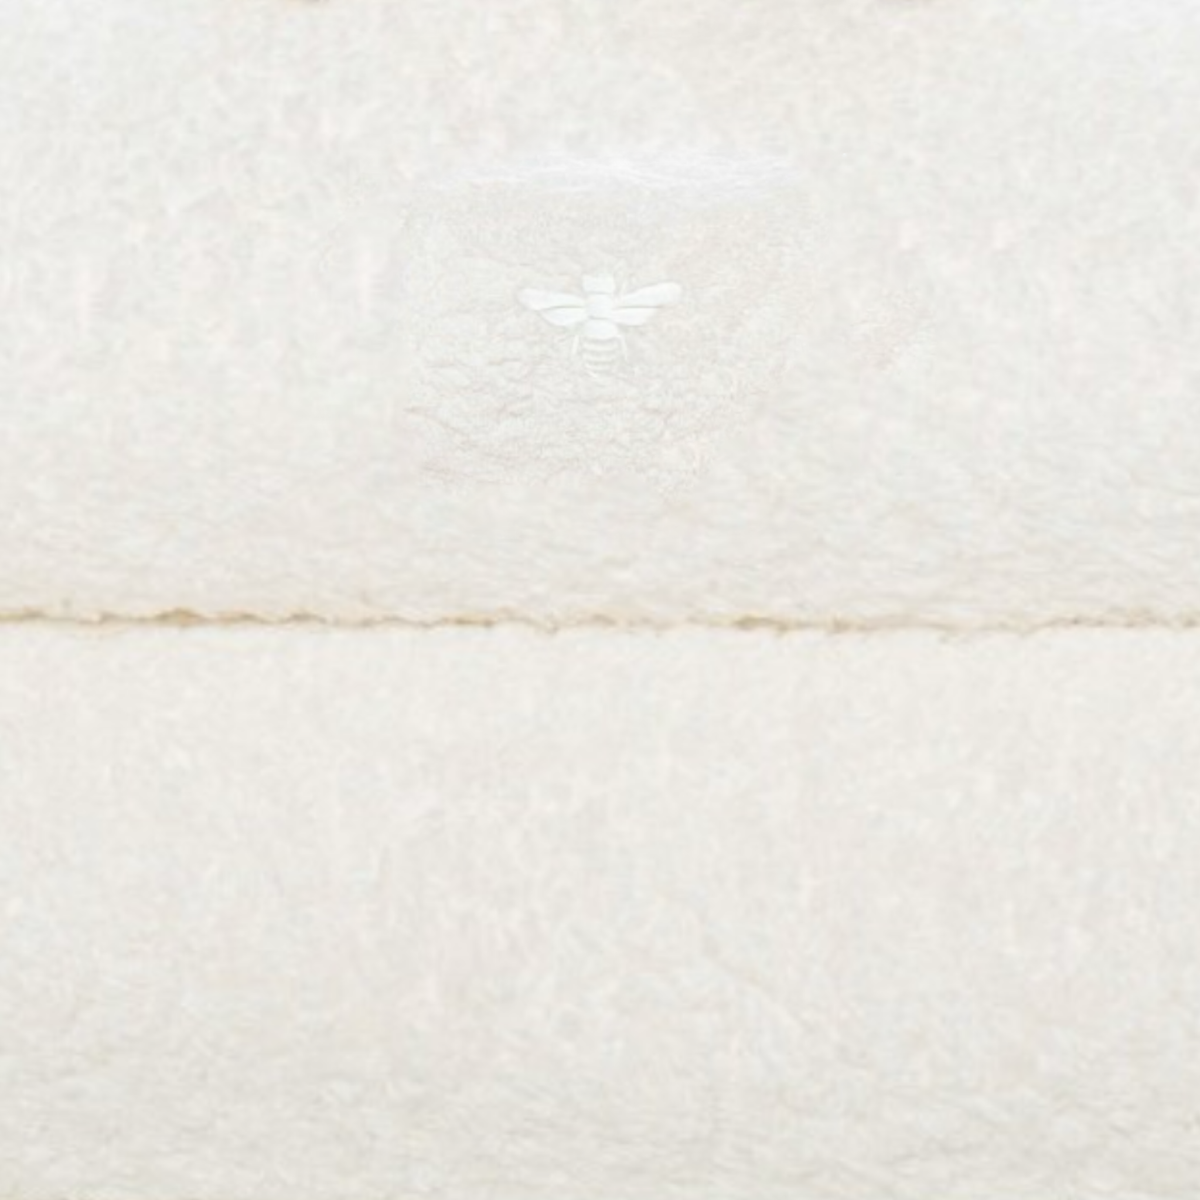 Fabric Closeup of Graccioza Apiary Bath Towels and Rugs